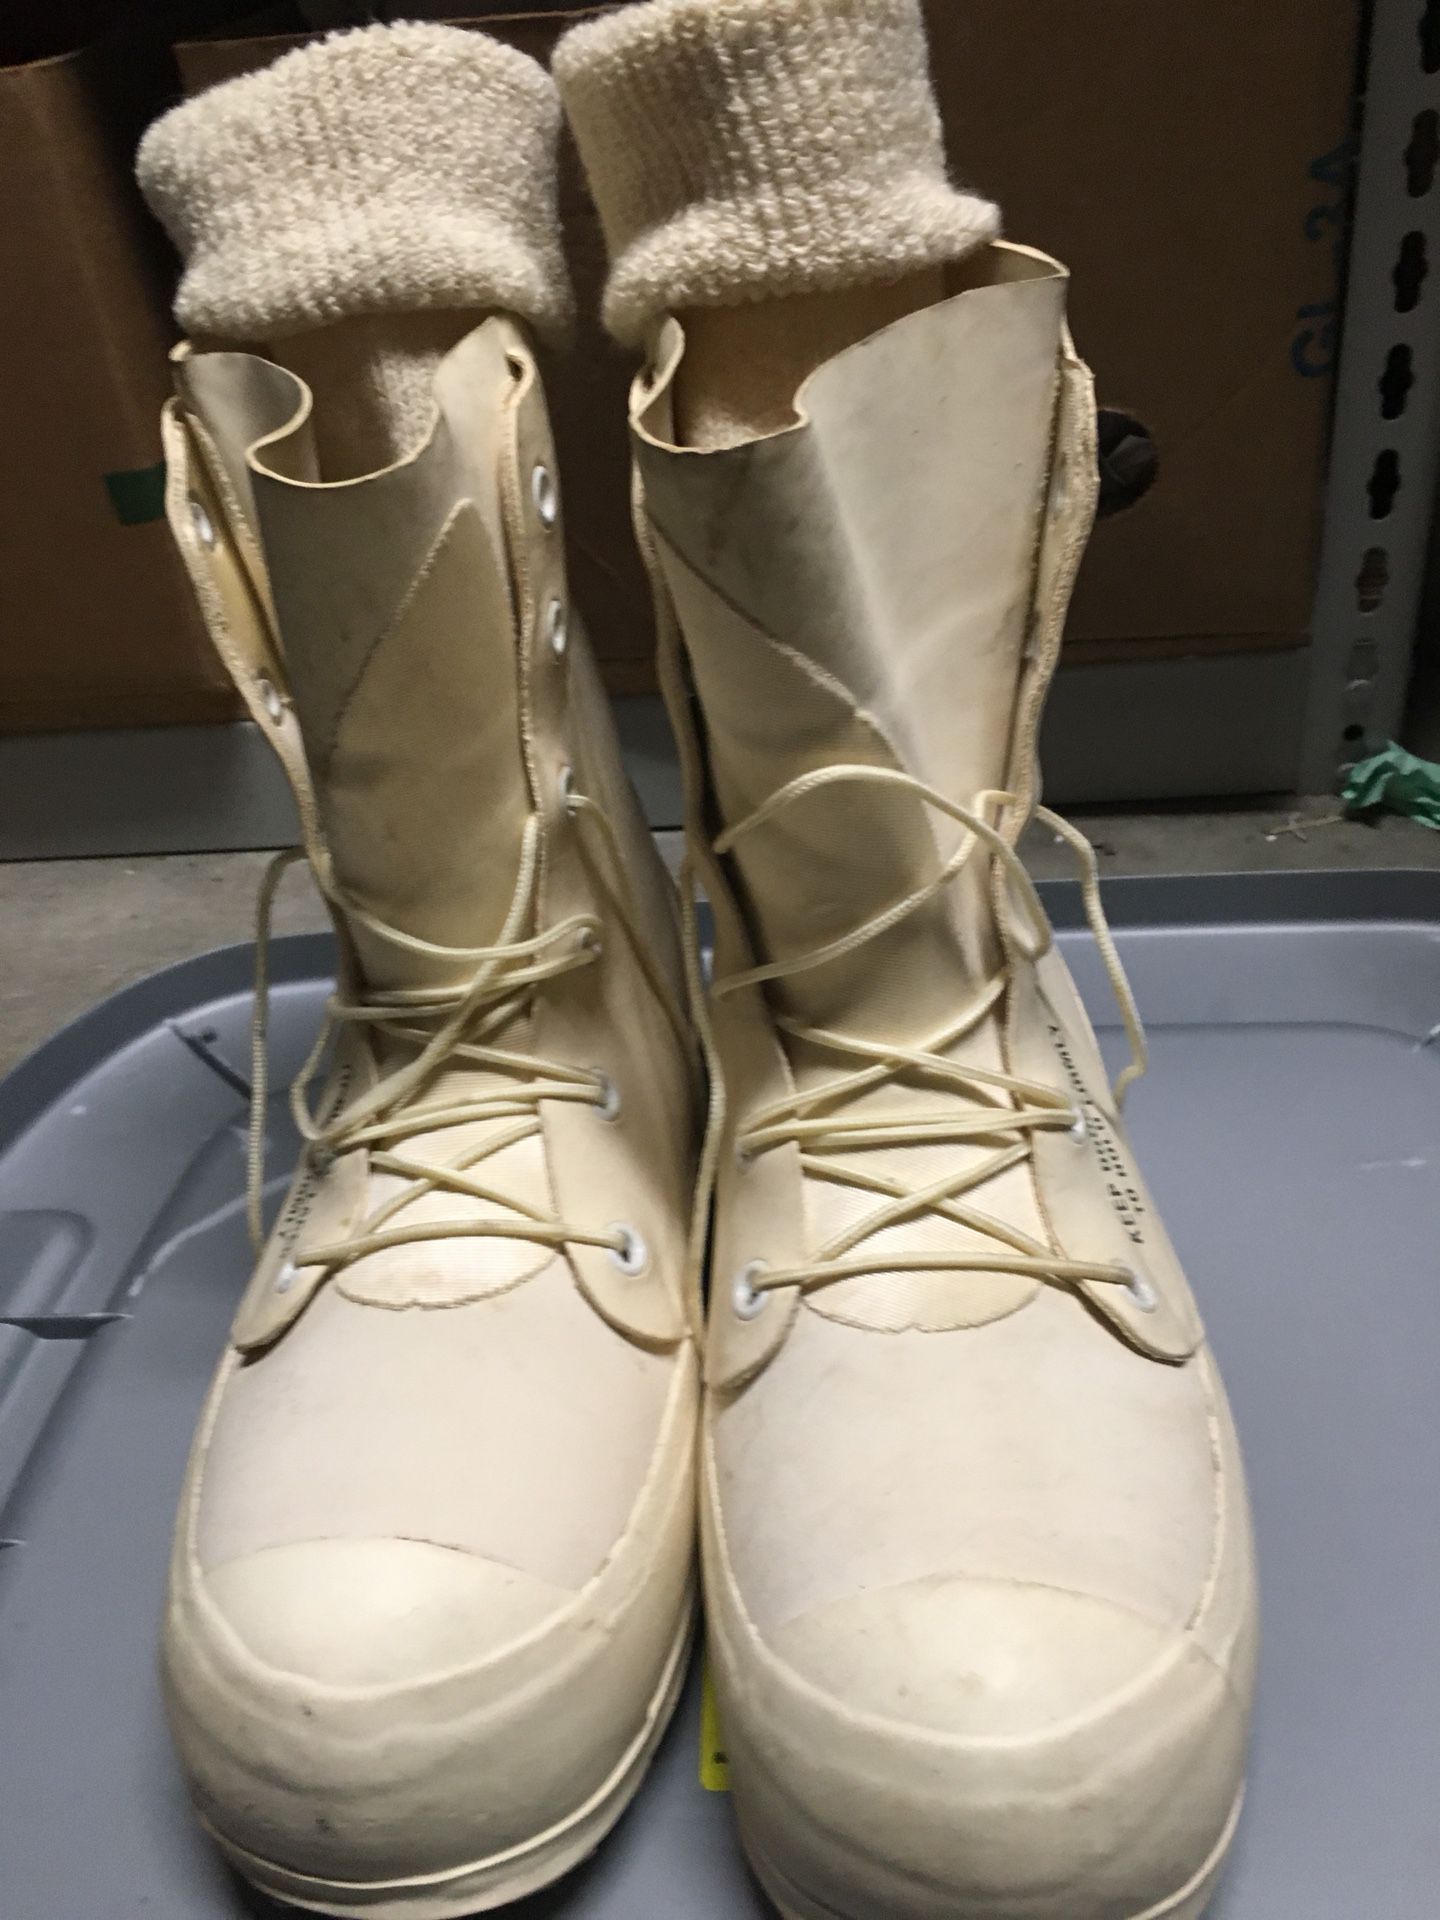 Mickey boots/ military bunny